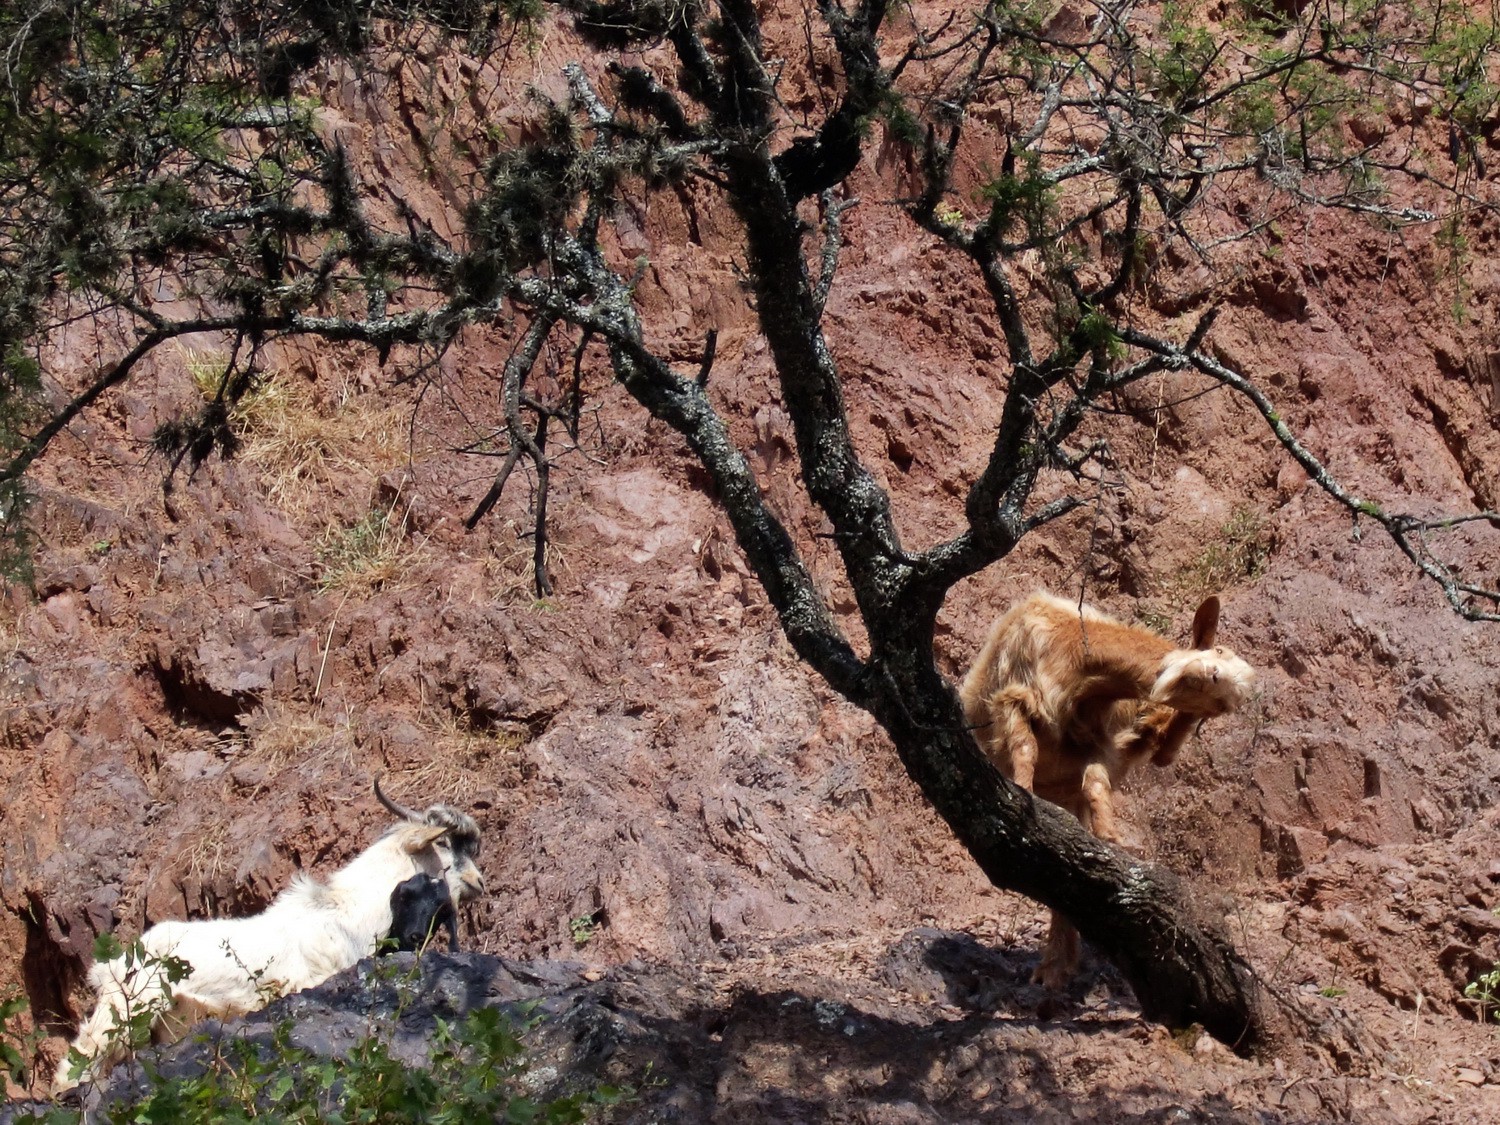 Two mountain goats